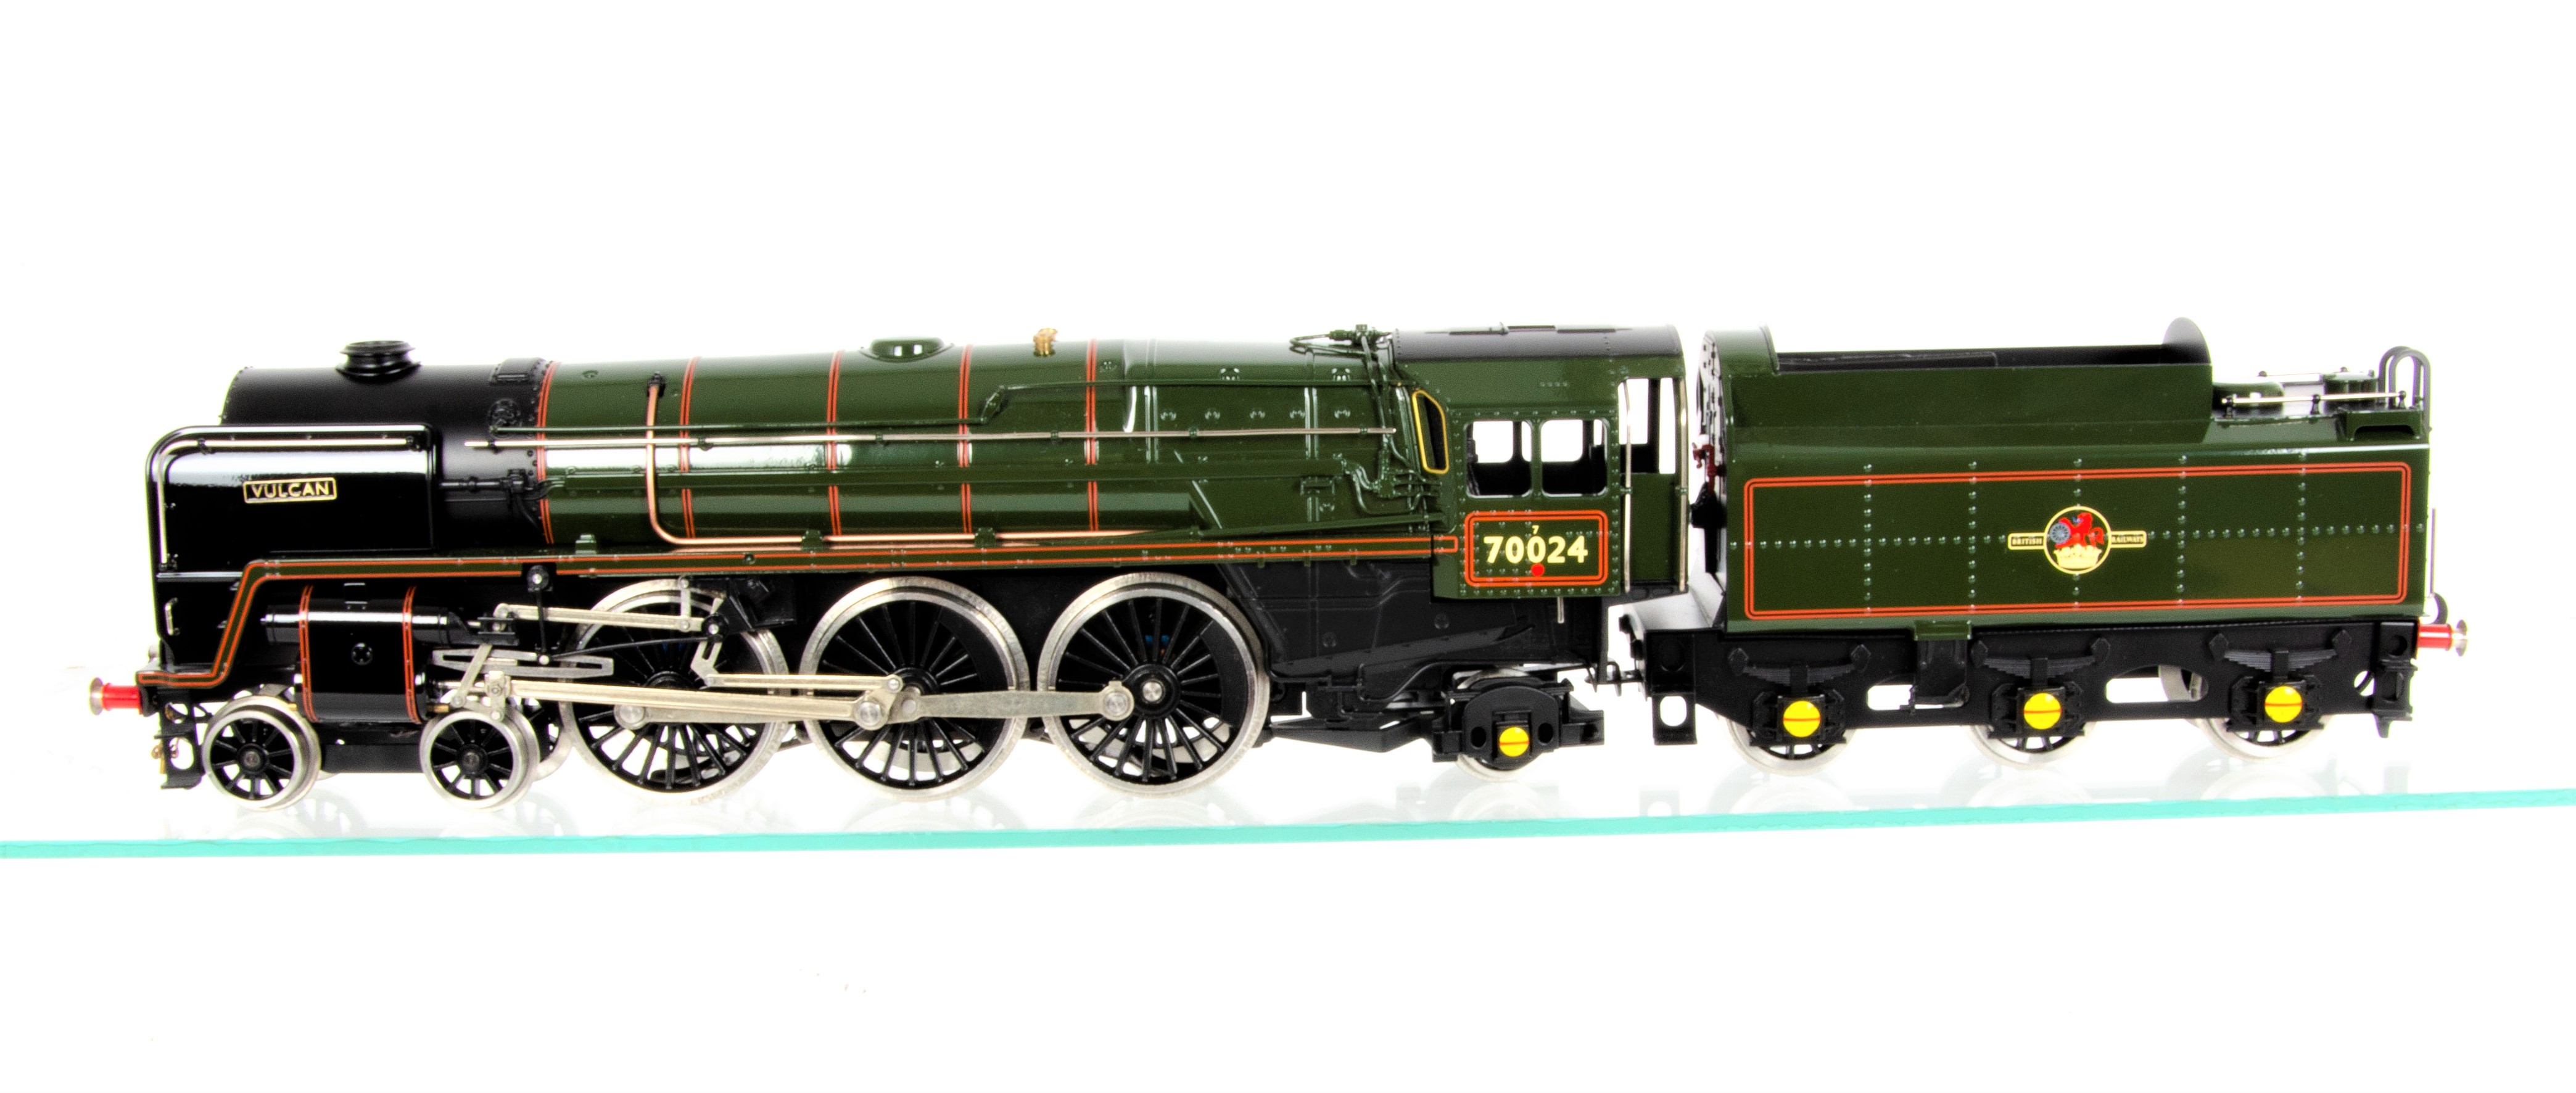 ACE Trains 0 Gauge E17 BR green Britannia Class 4-6-2 Locomotive and Tender, No 70024 'Vulcan', in